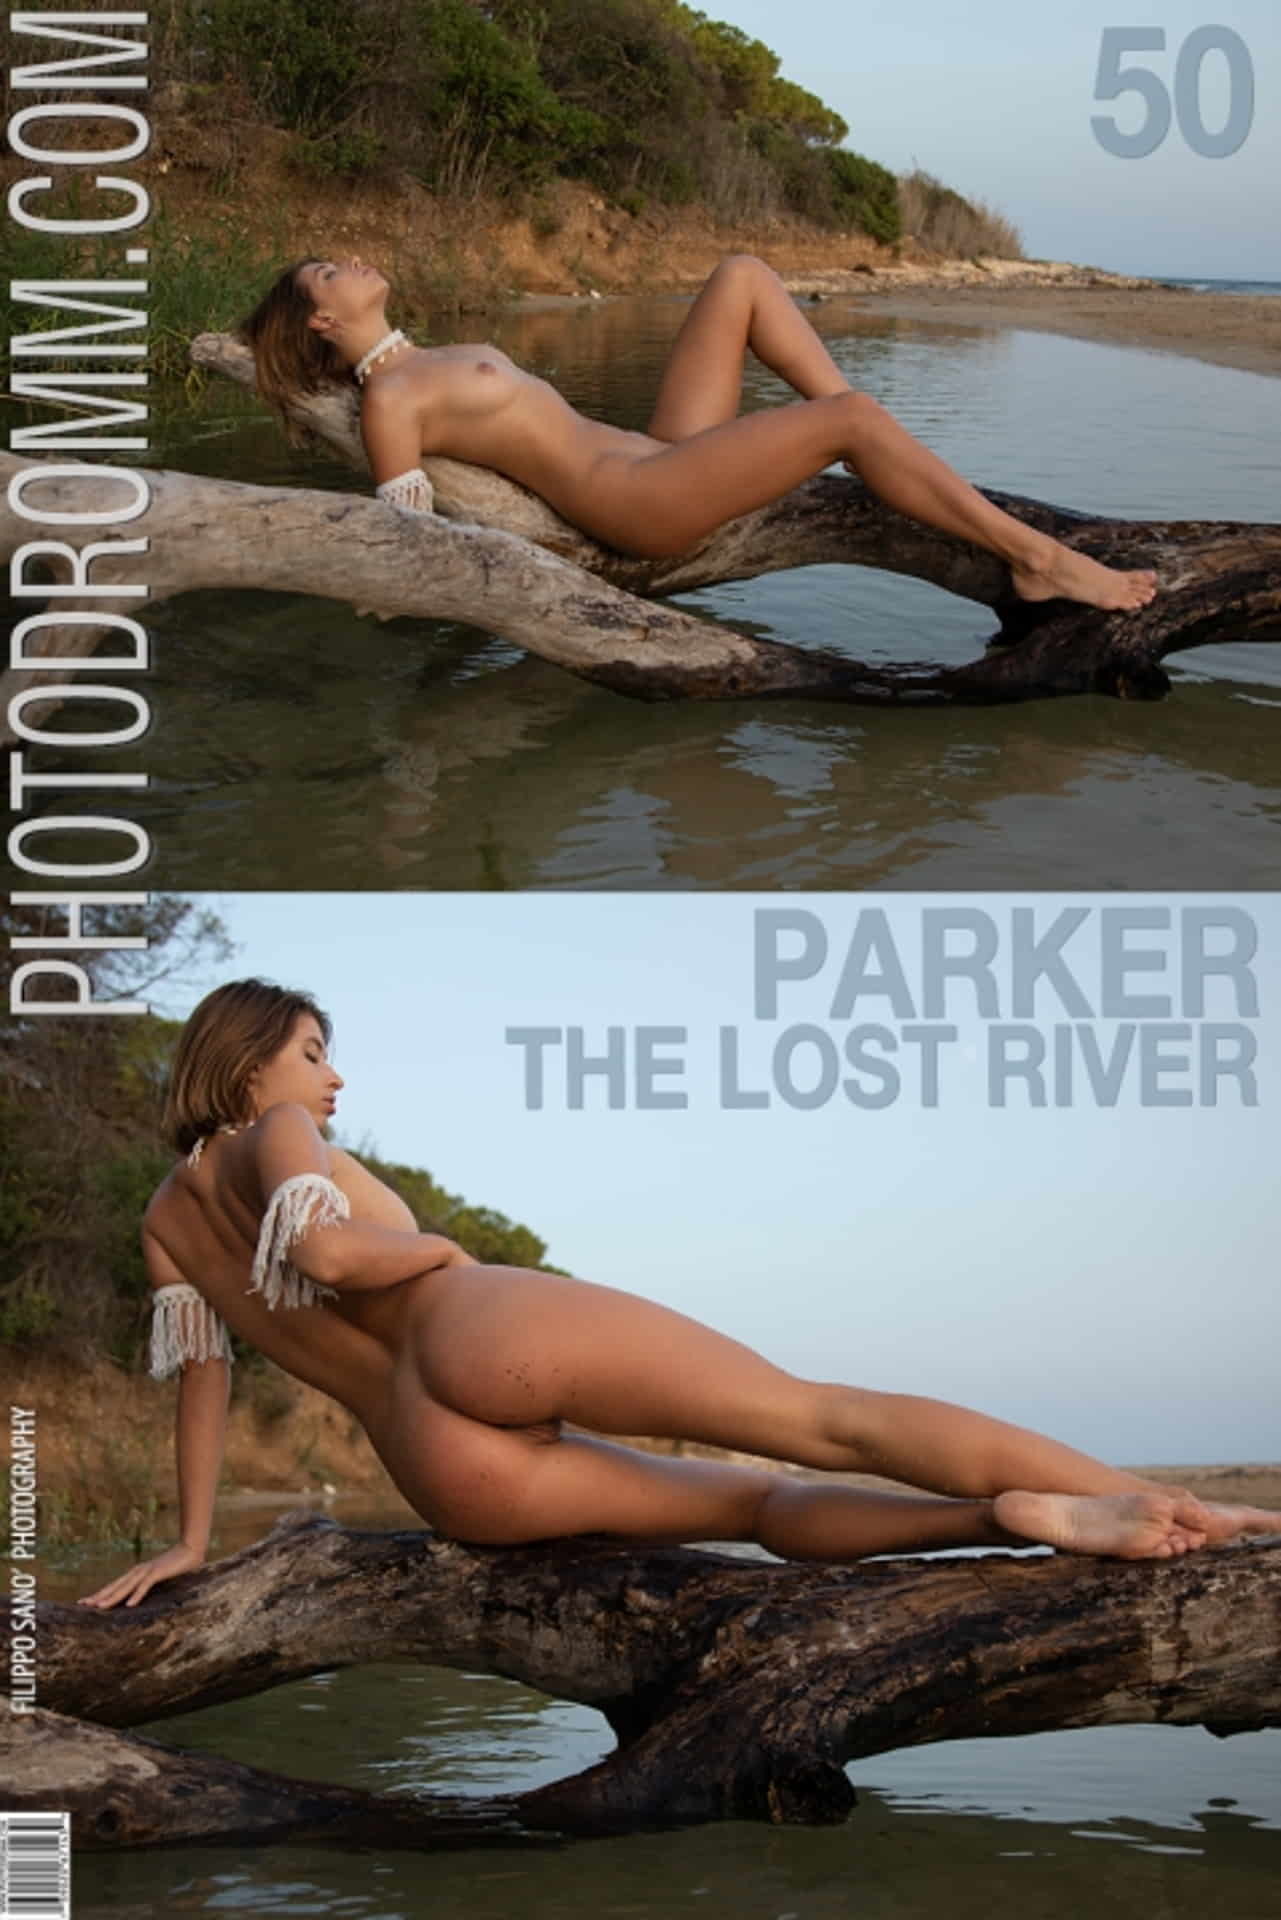 迷失的河流还是迷失的少女——parker_the lost river